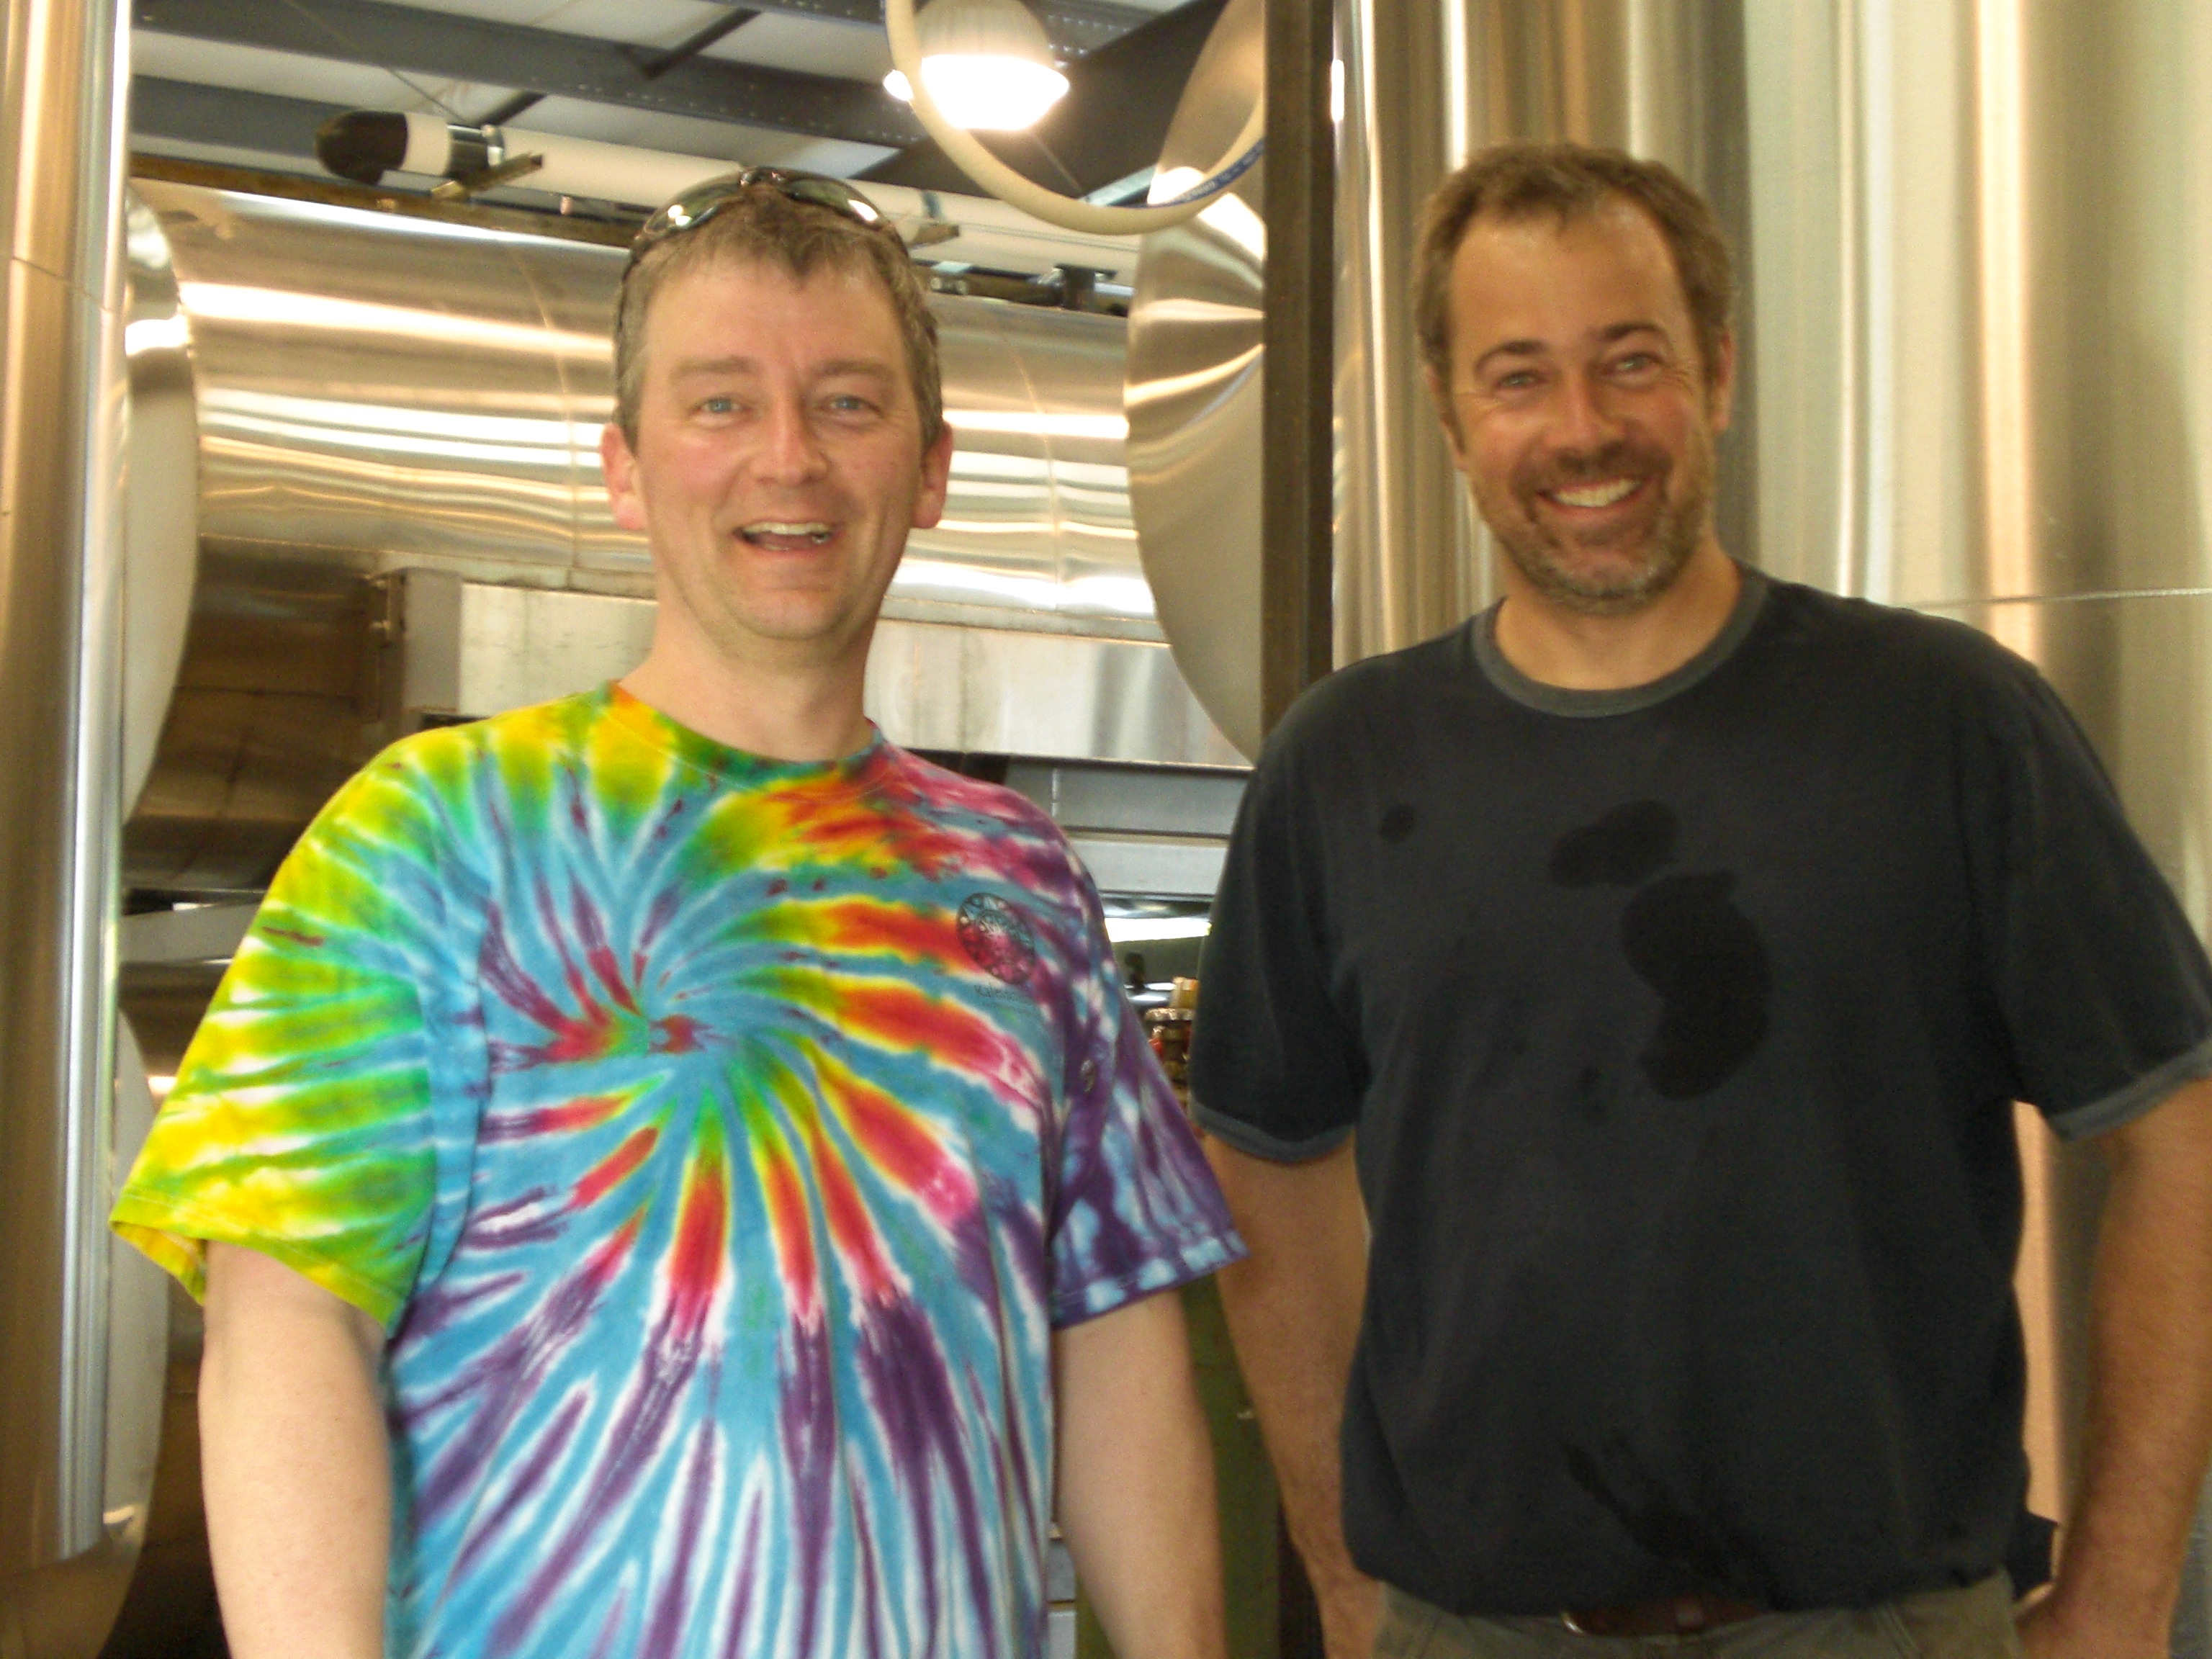 SOB founder Tom Hammond (left) and brewer Scott Saulsbury